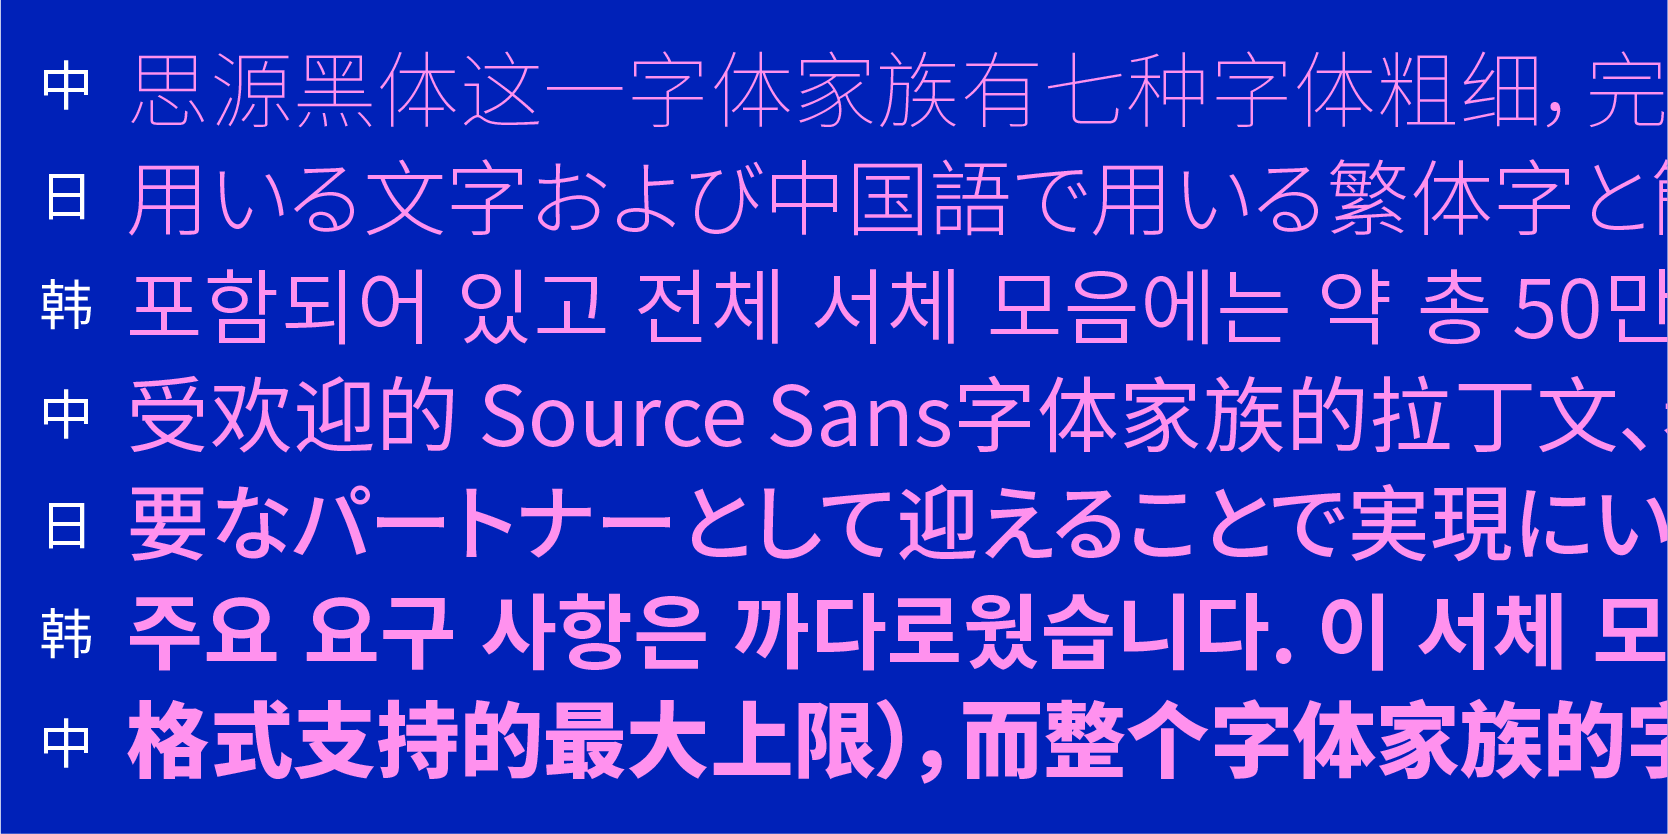 Card displaying Source Han Sans CJK Japanese typeface in various styles